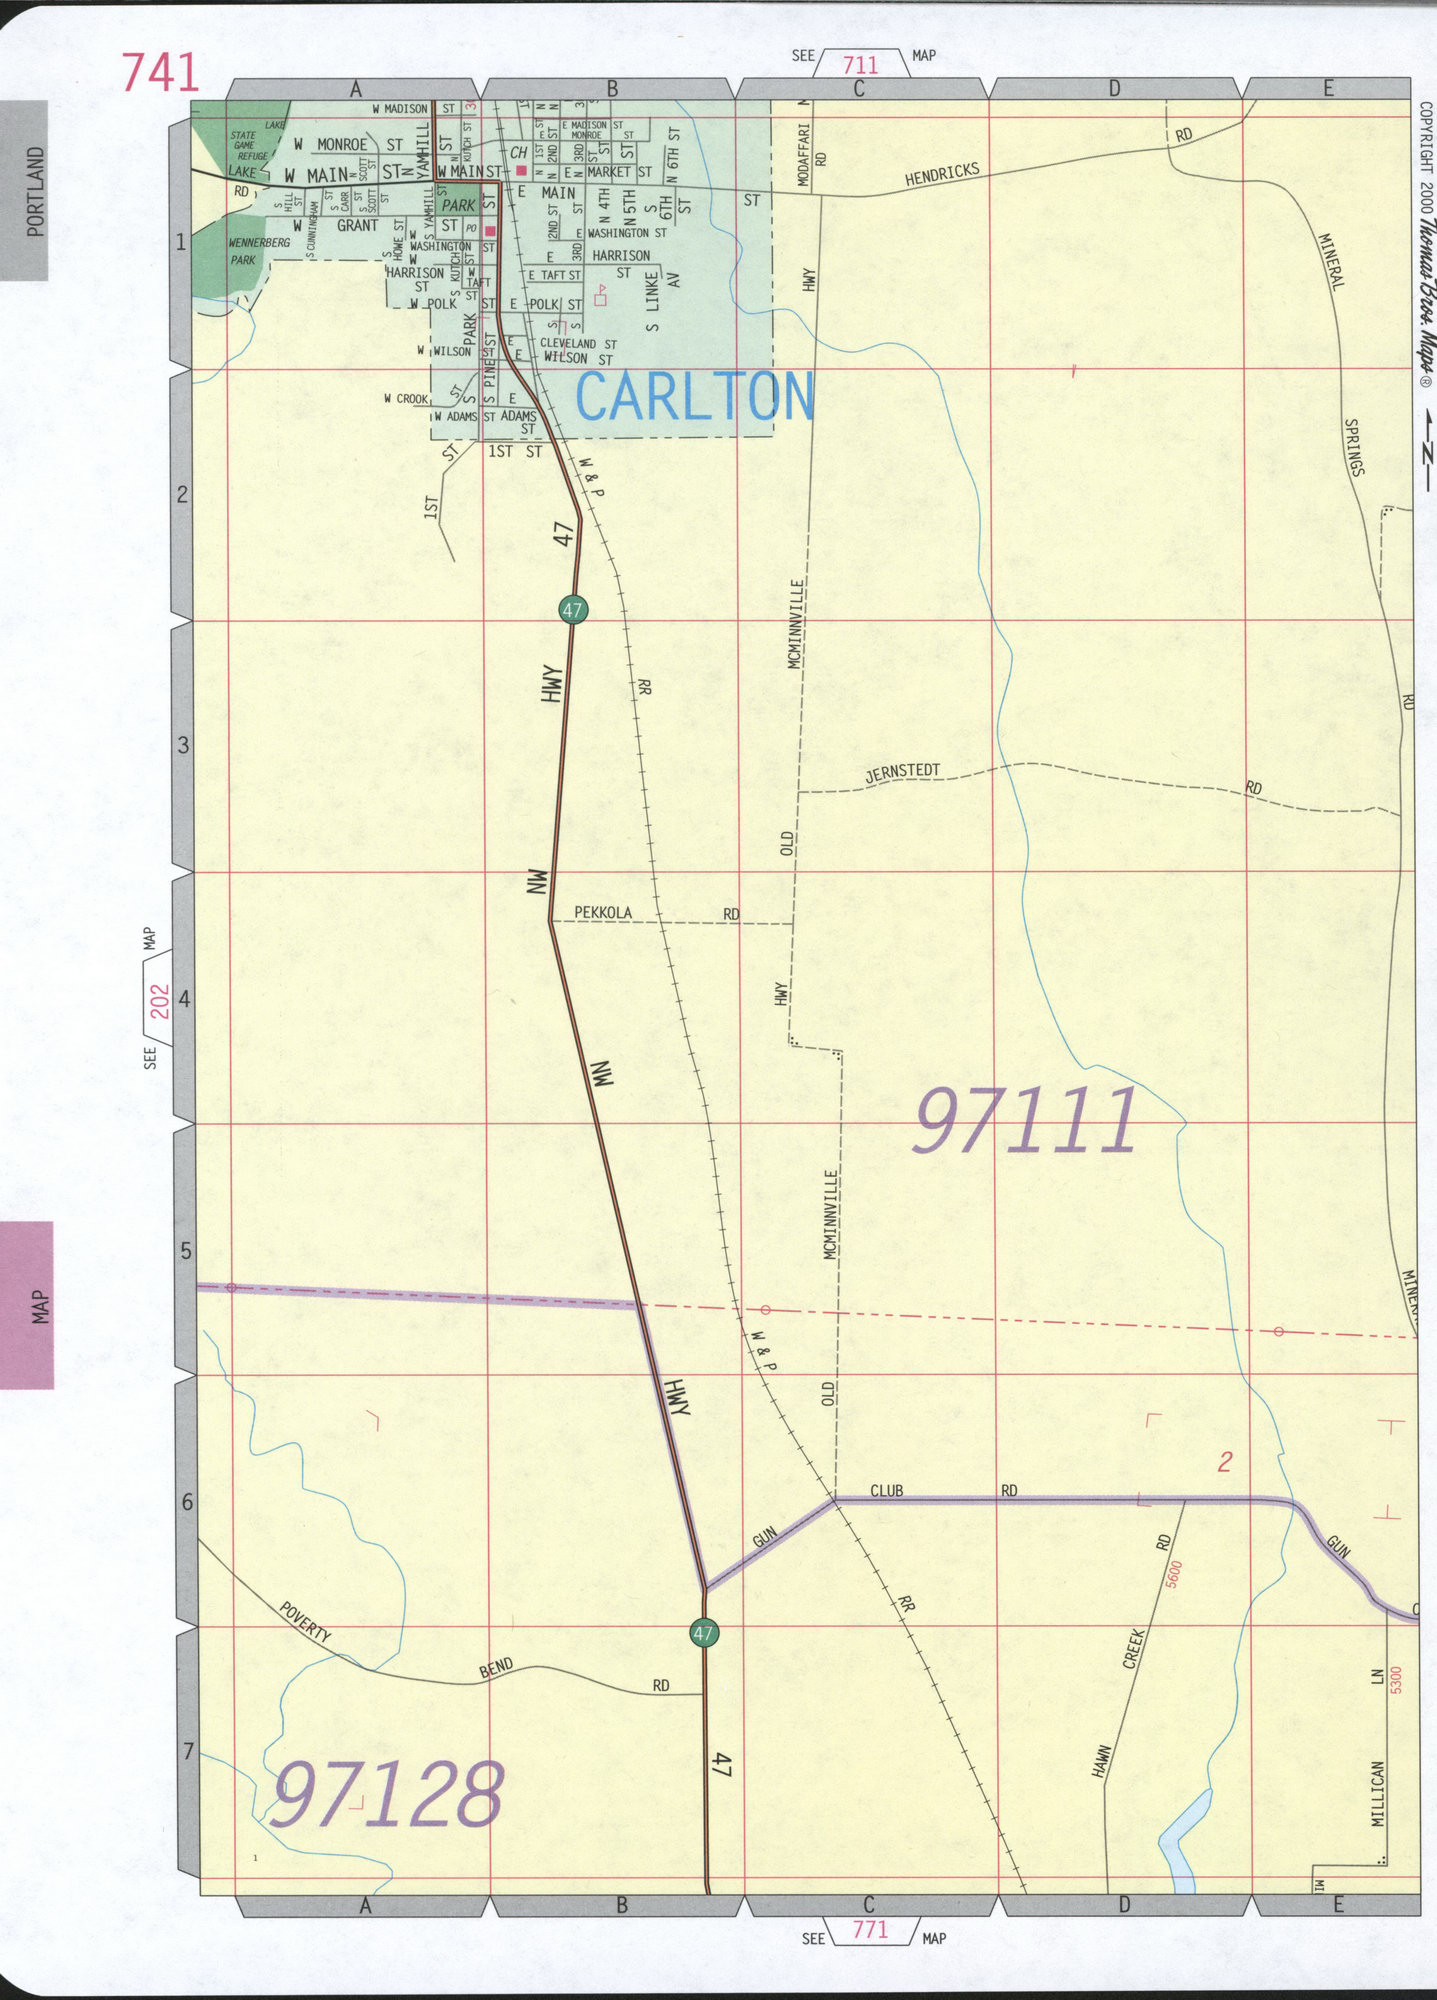 Carlton map